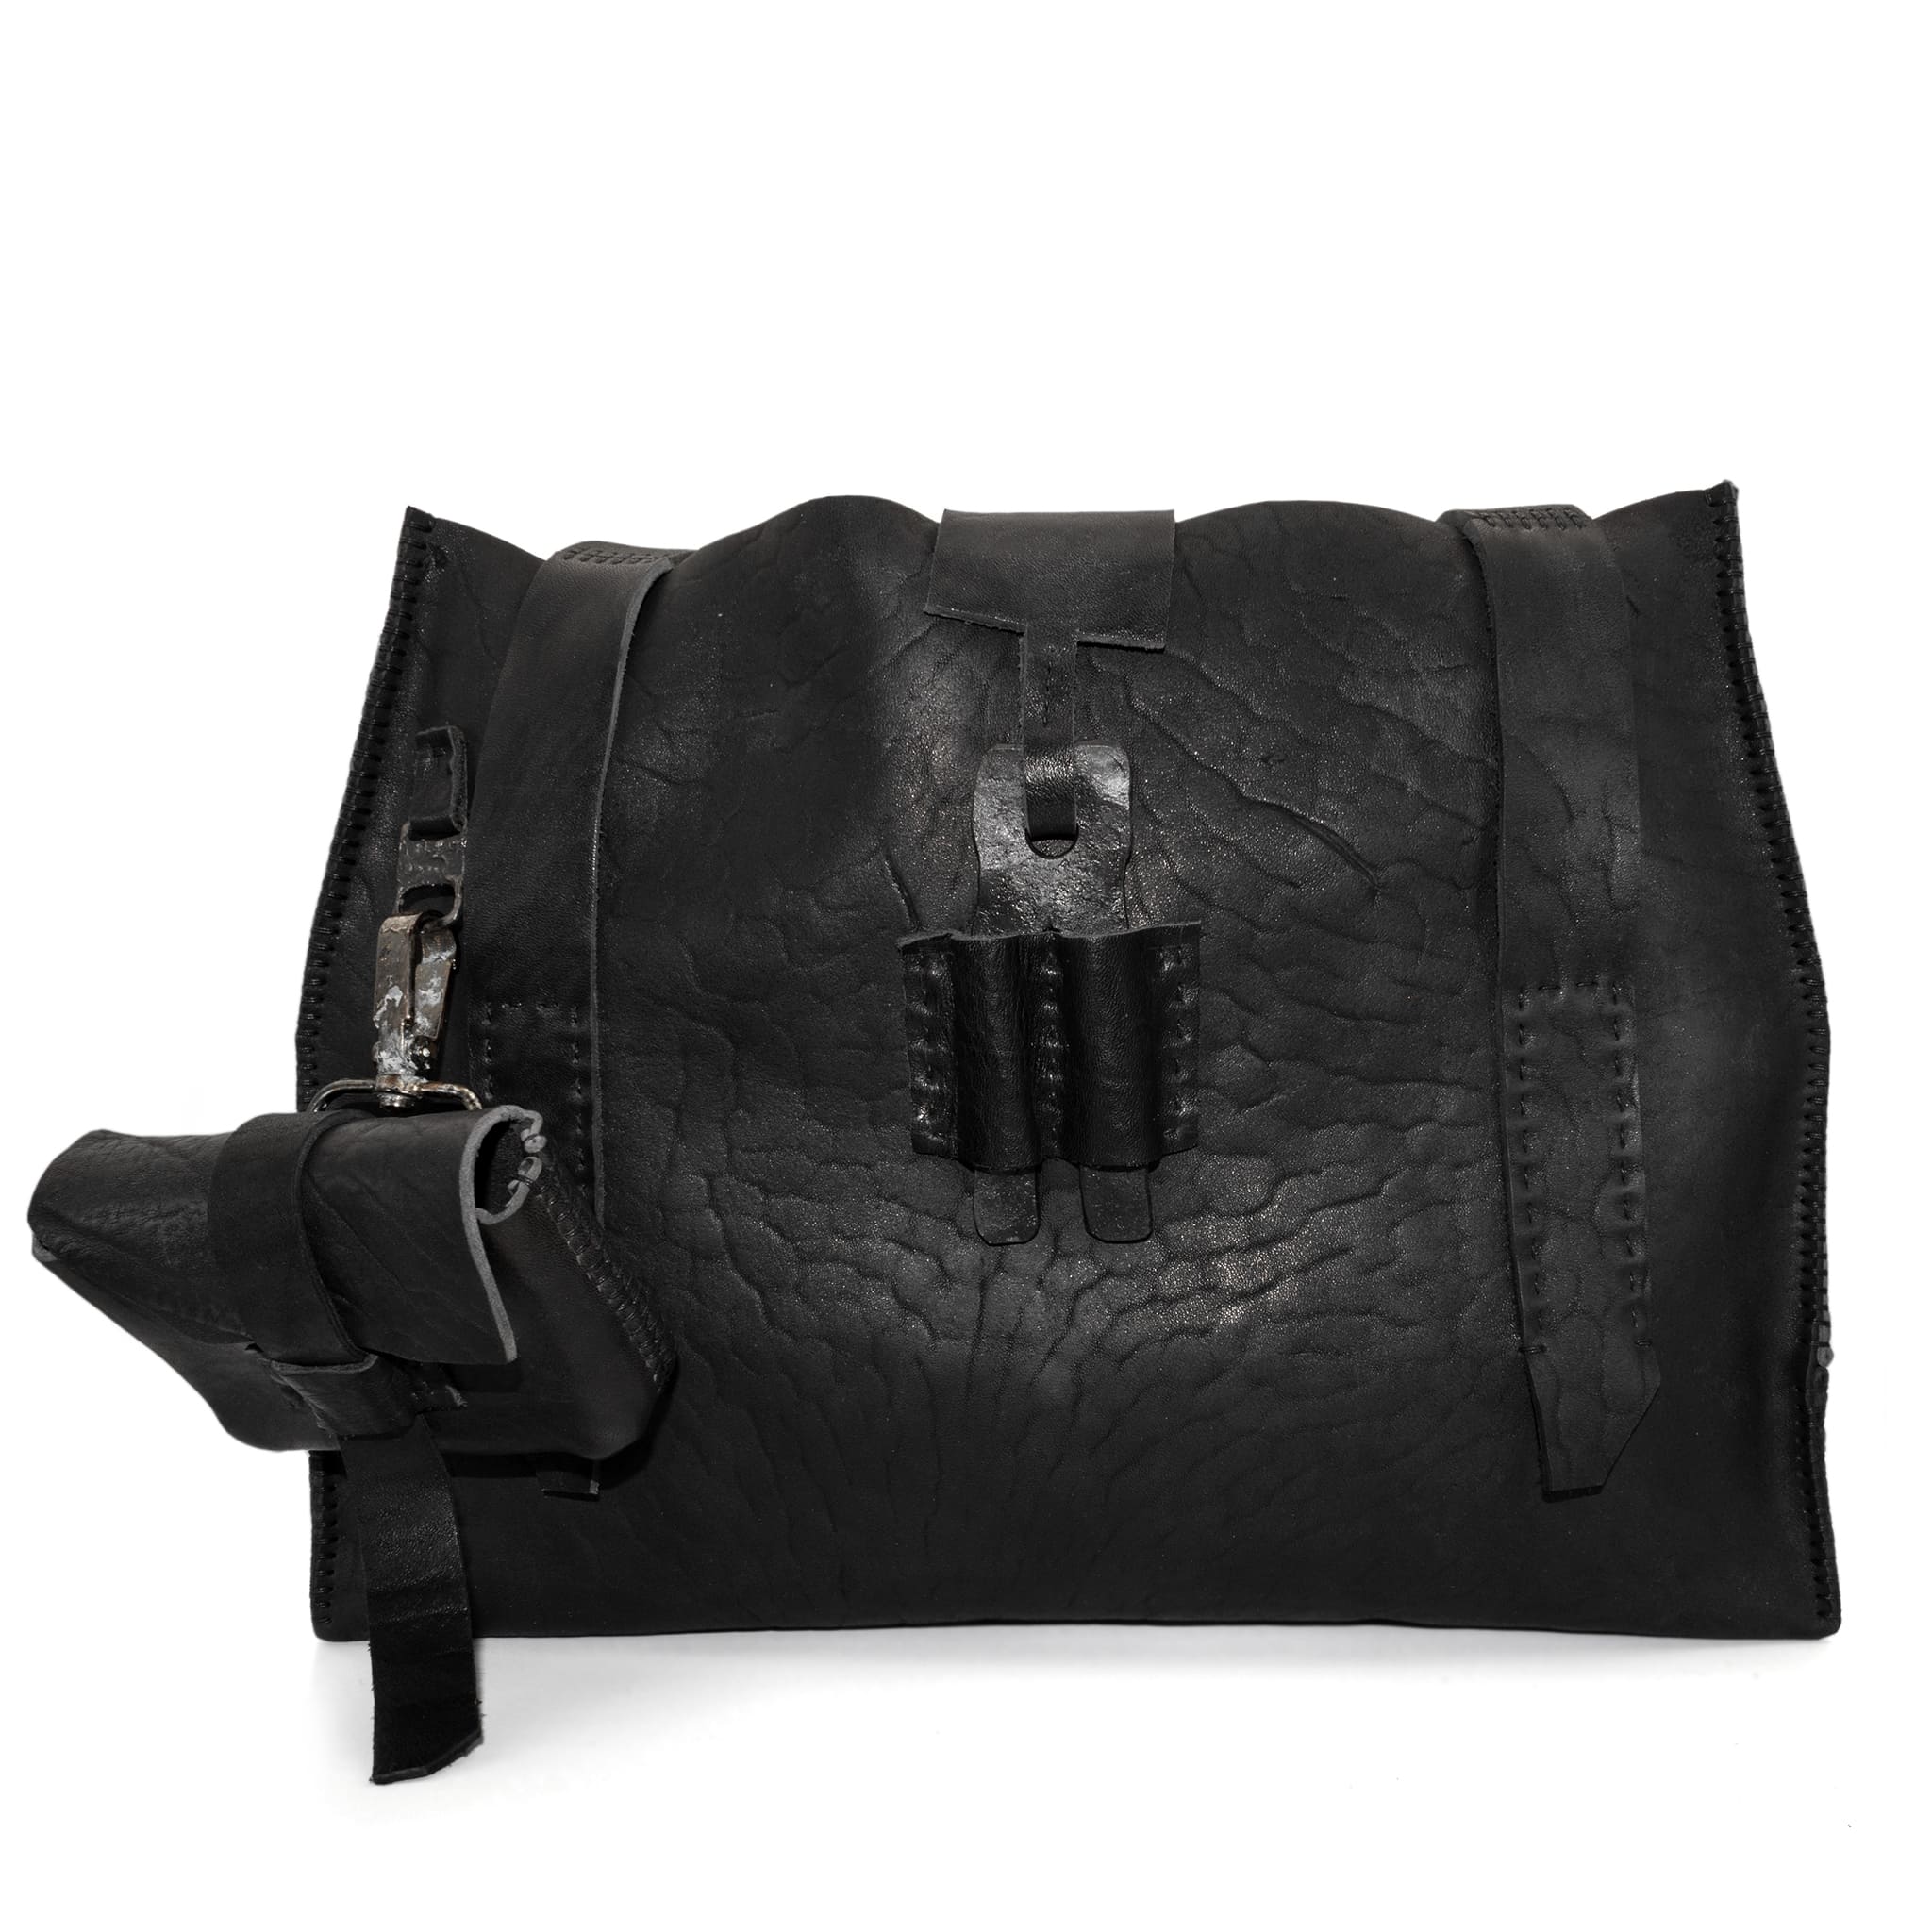 Buy August Ladies Leather Tote Bag for Women & Girls Large Handbag Vintage  Shoulder Bag Shopping Purse (Black) at Amazon.in